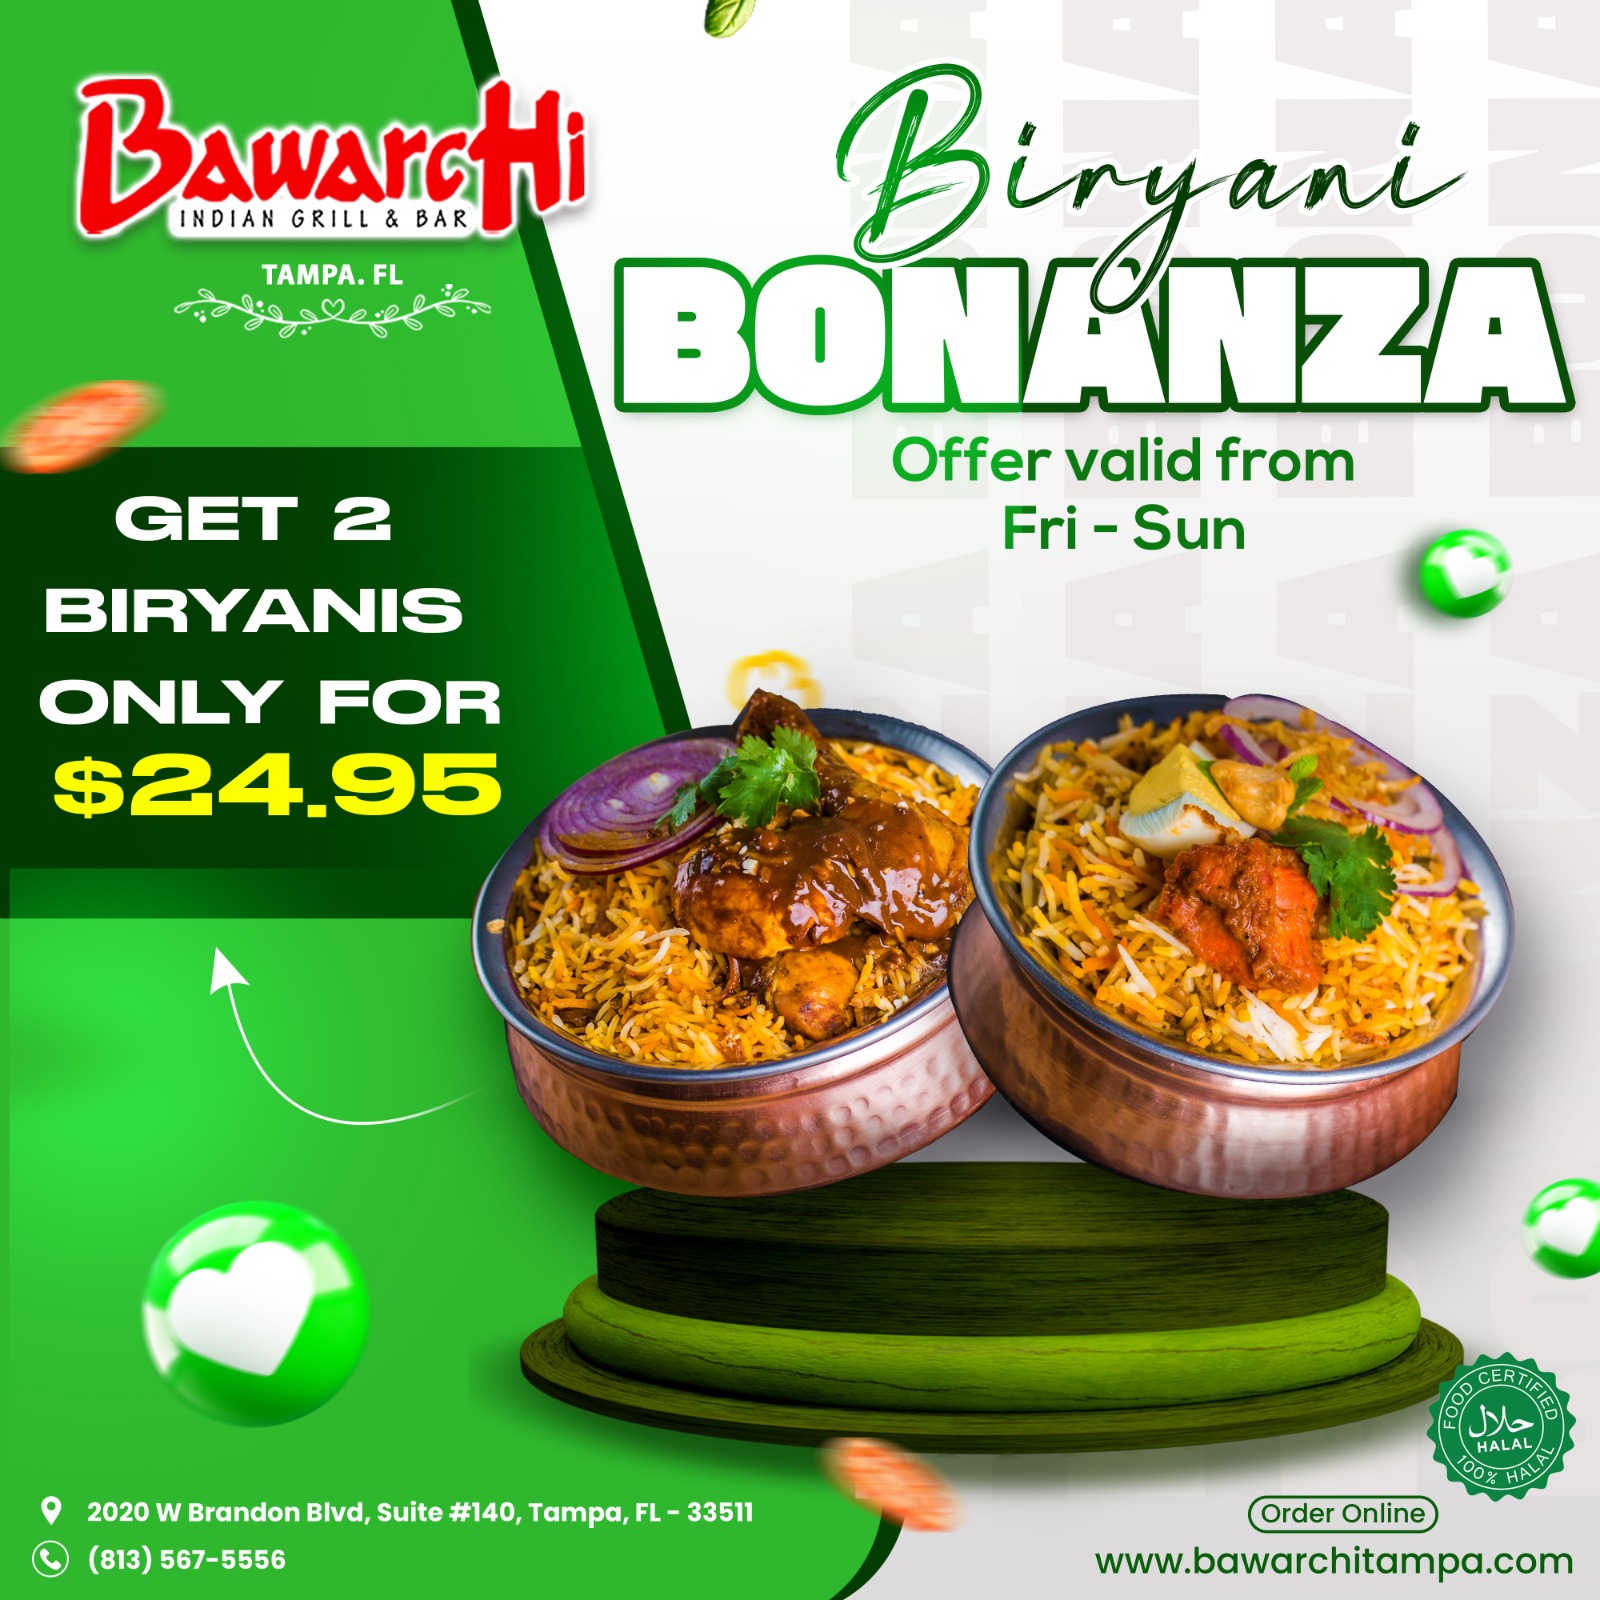 BIRYANI BONANZA!  Get 2 mouth-watering Biryanis for just $24.95! 